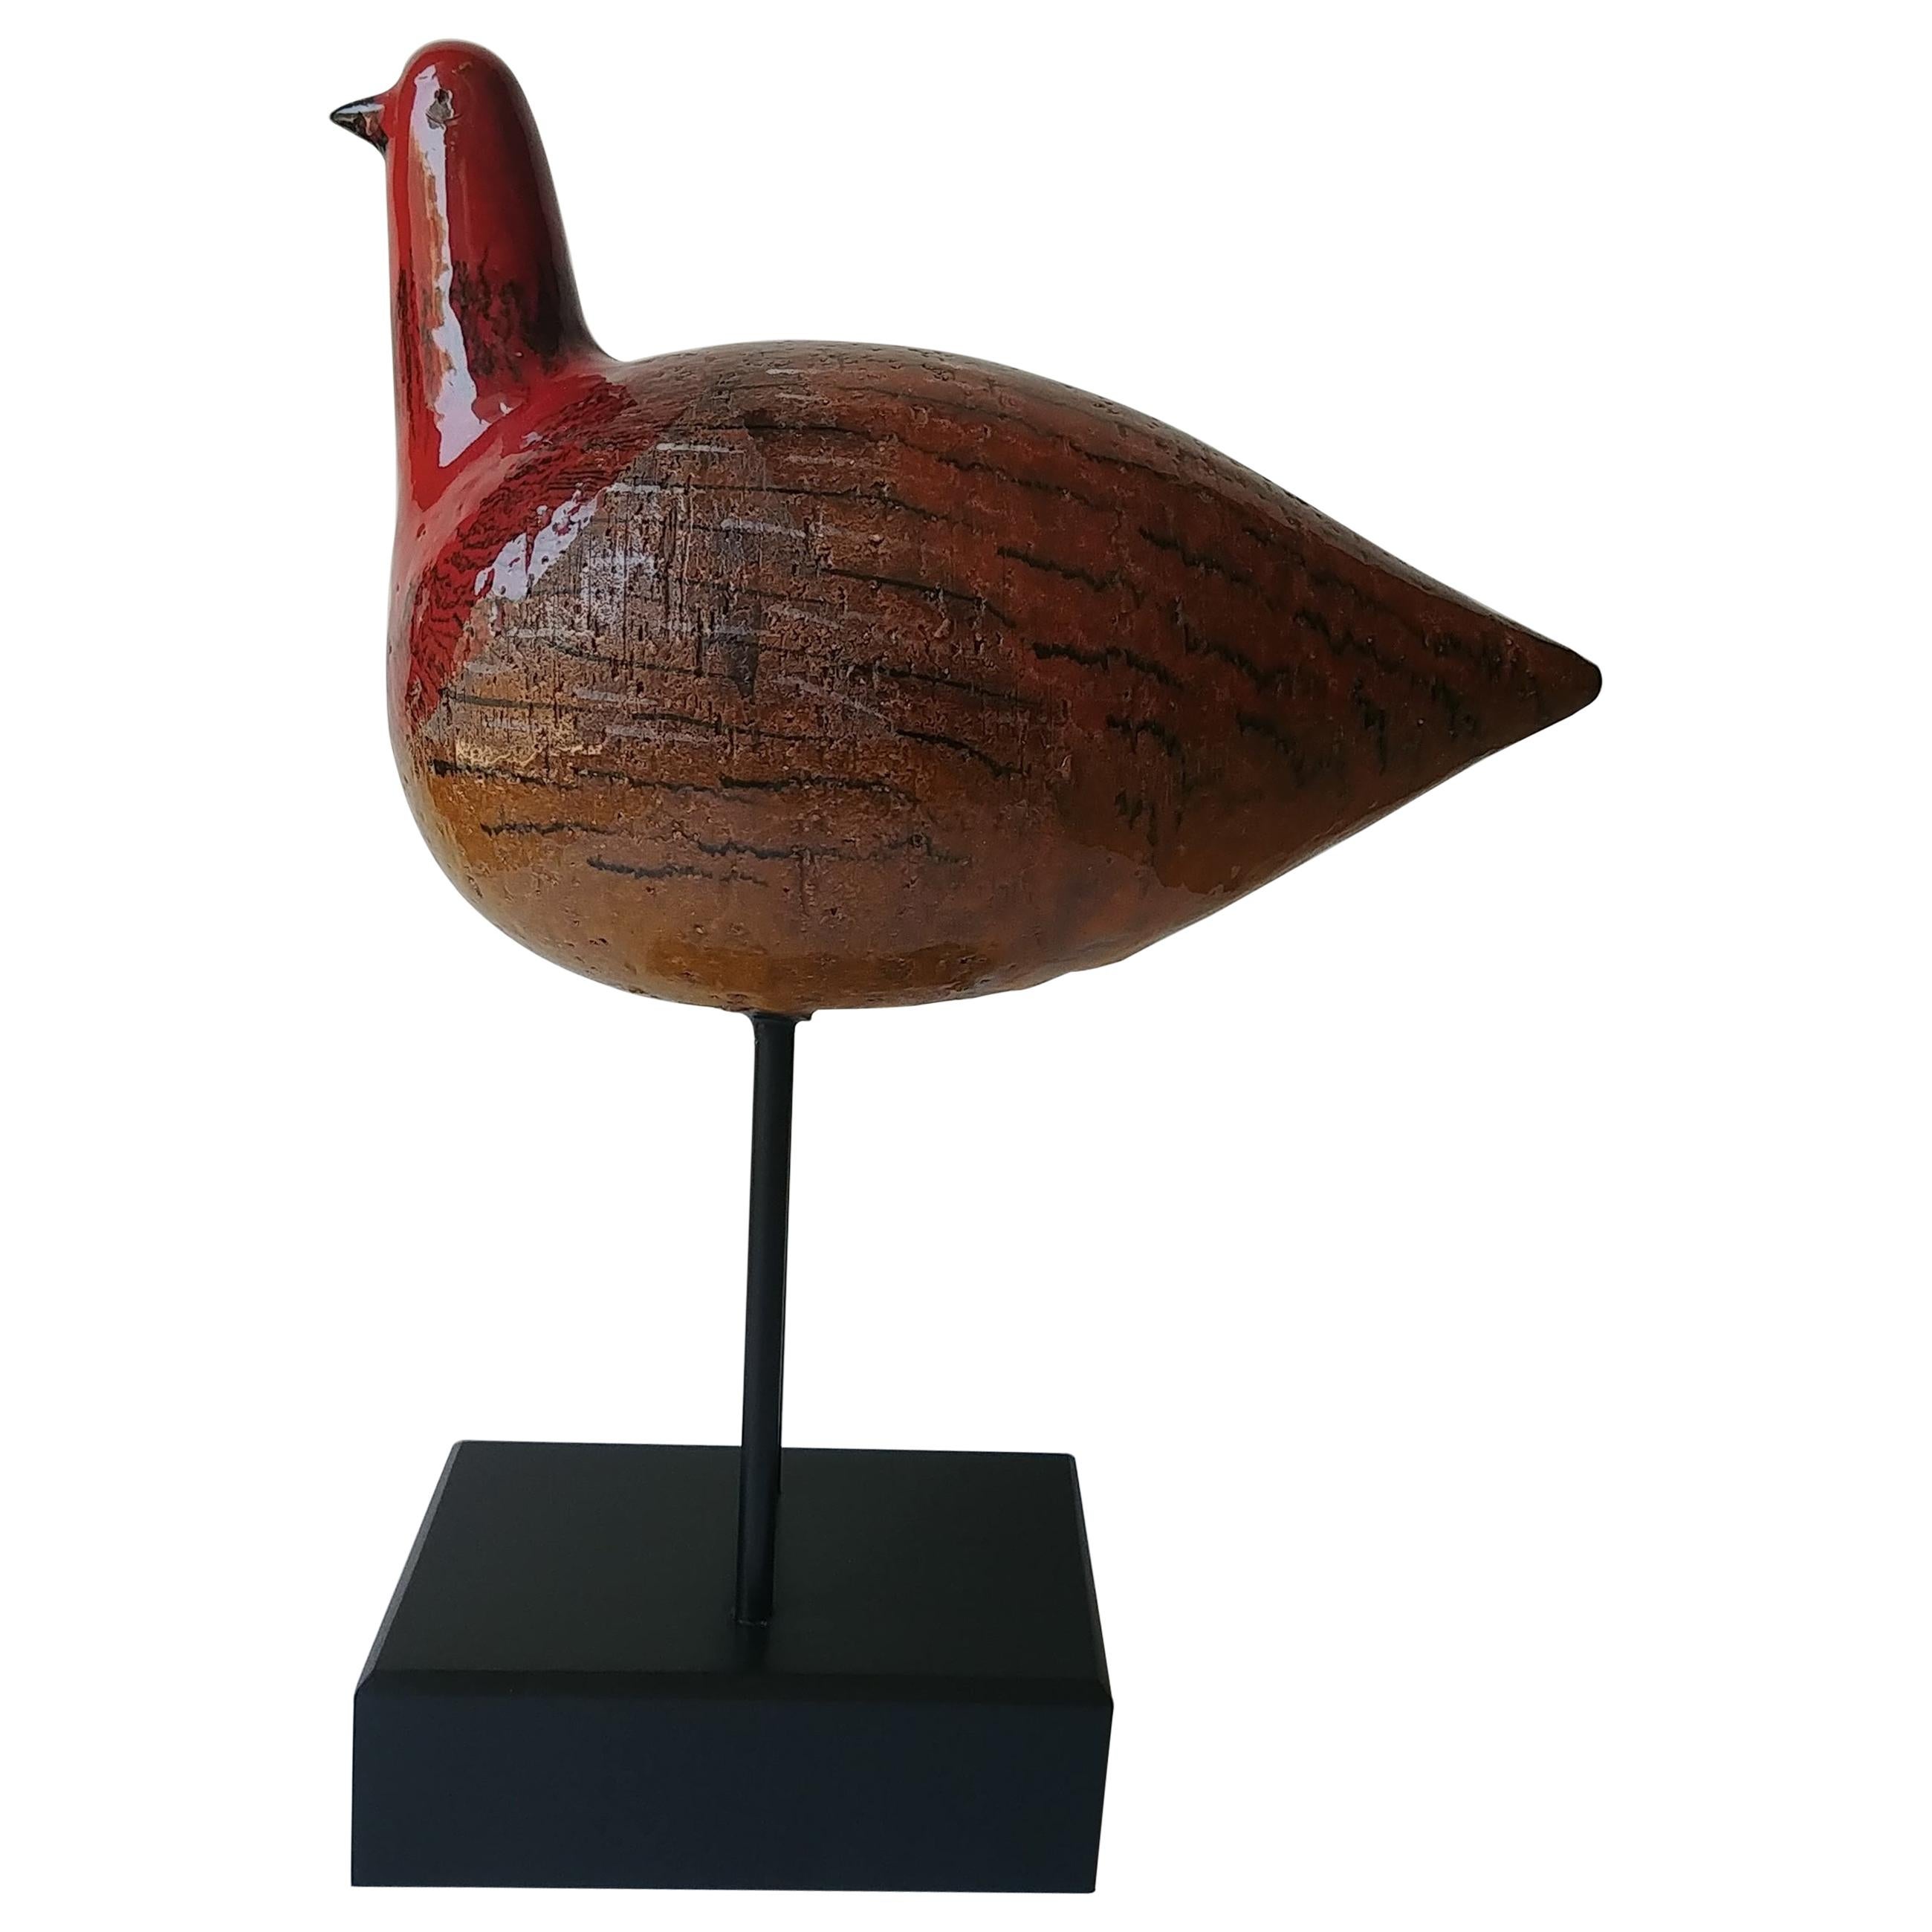 Aldo Londi, Large  Ceramic Bird, Sculpture, by Bitossi